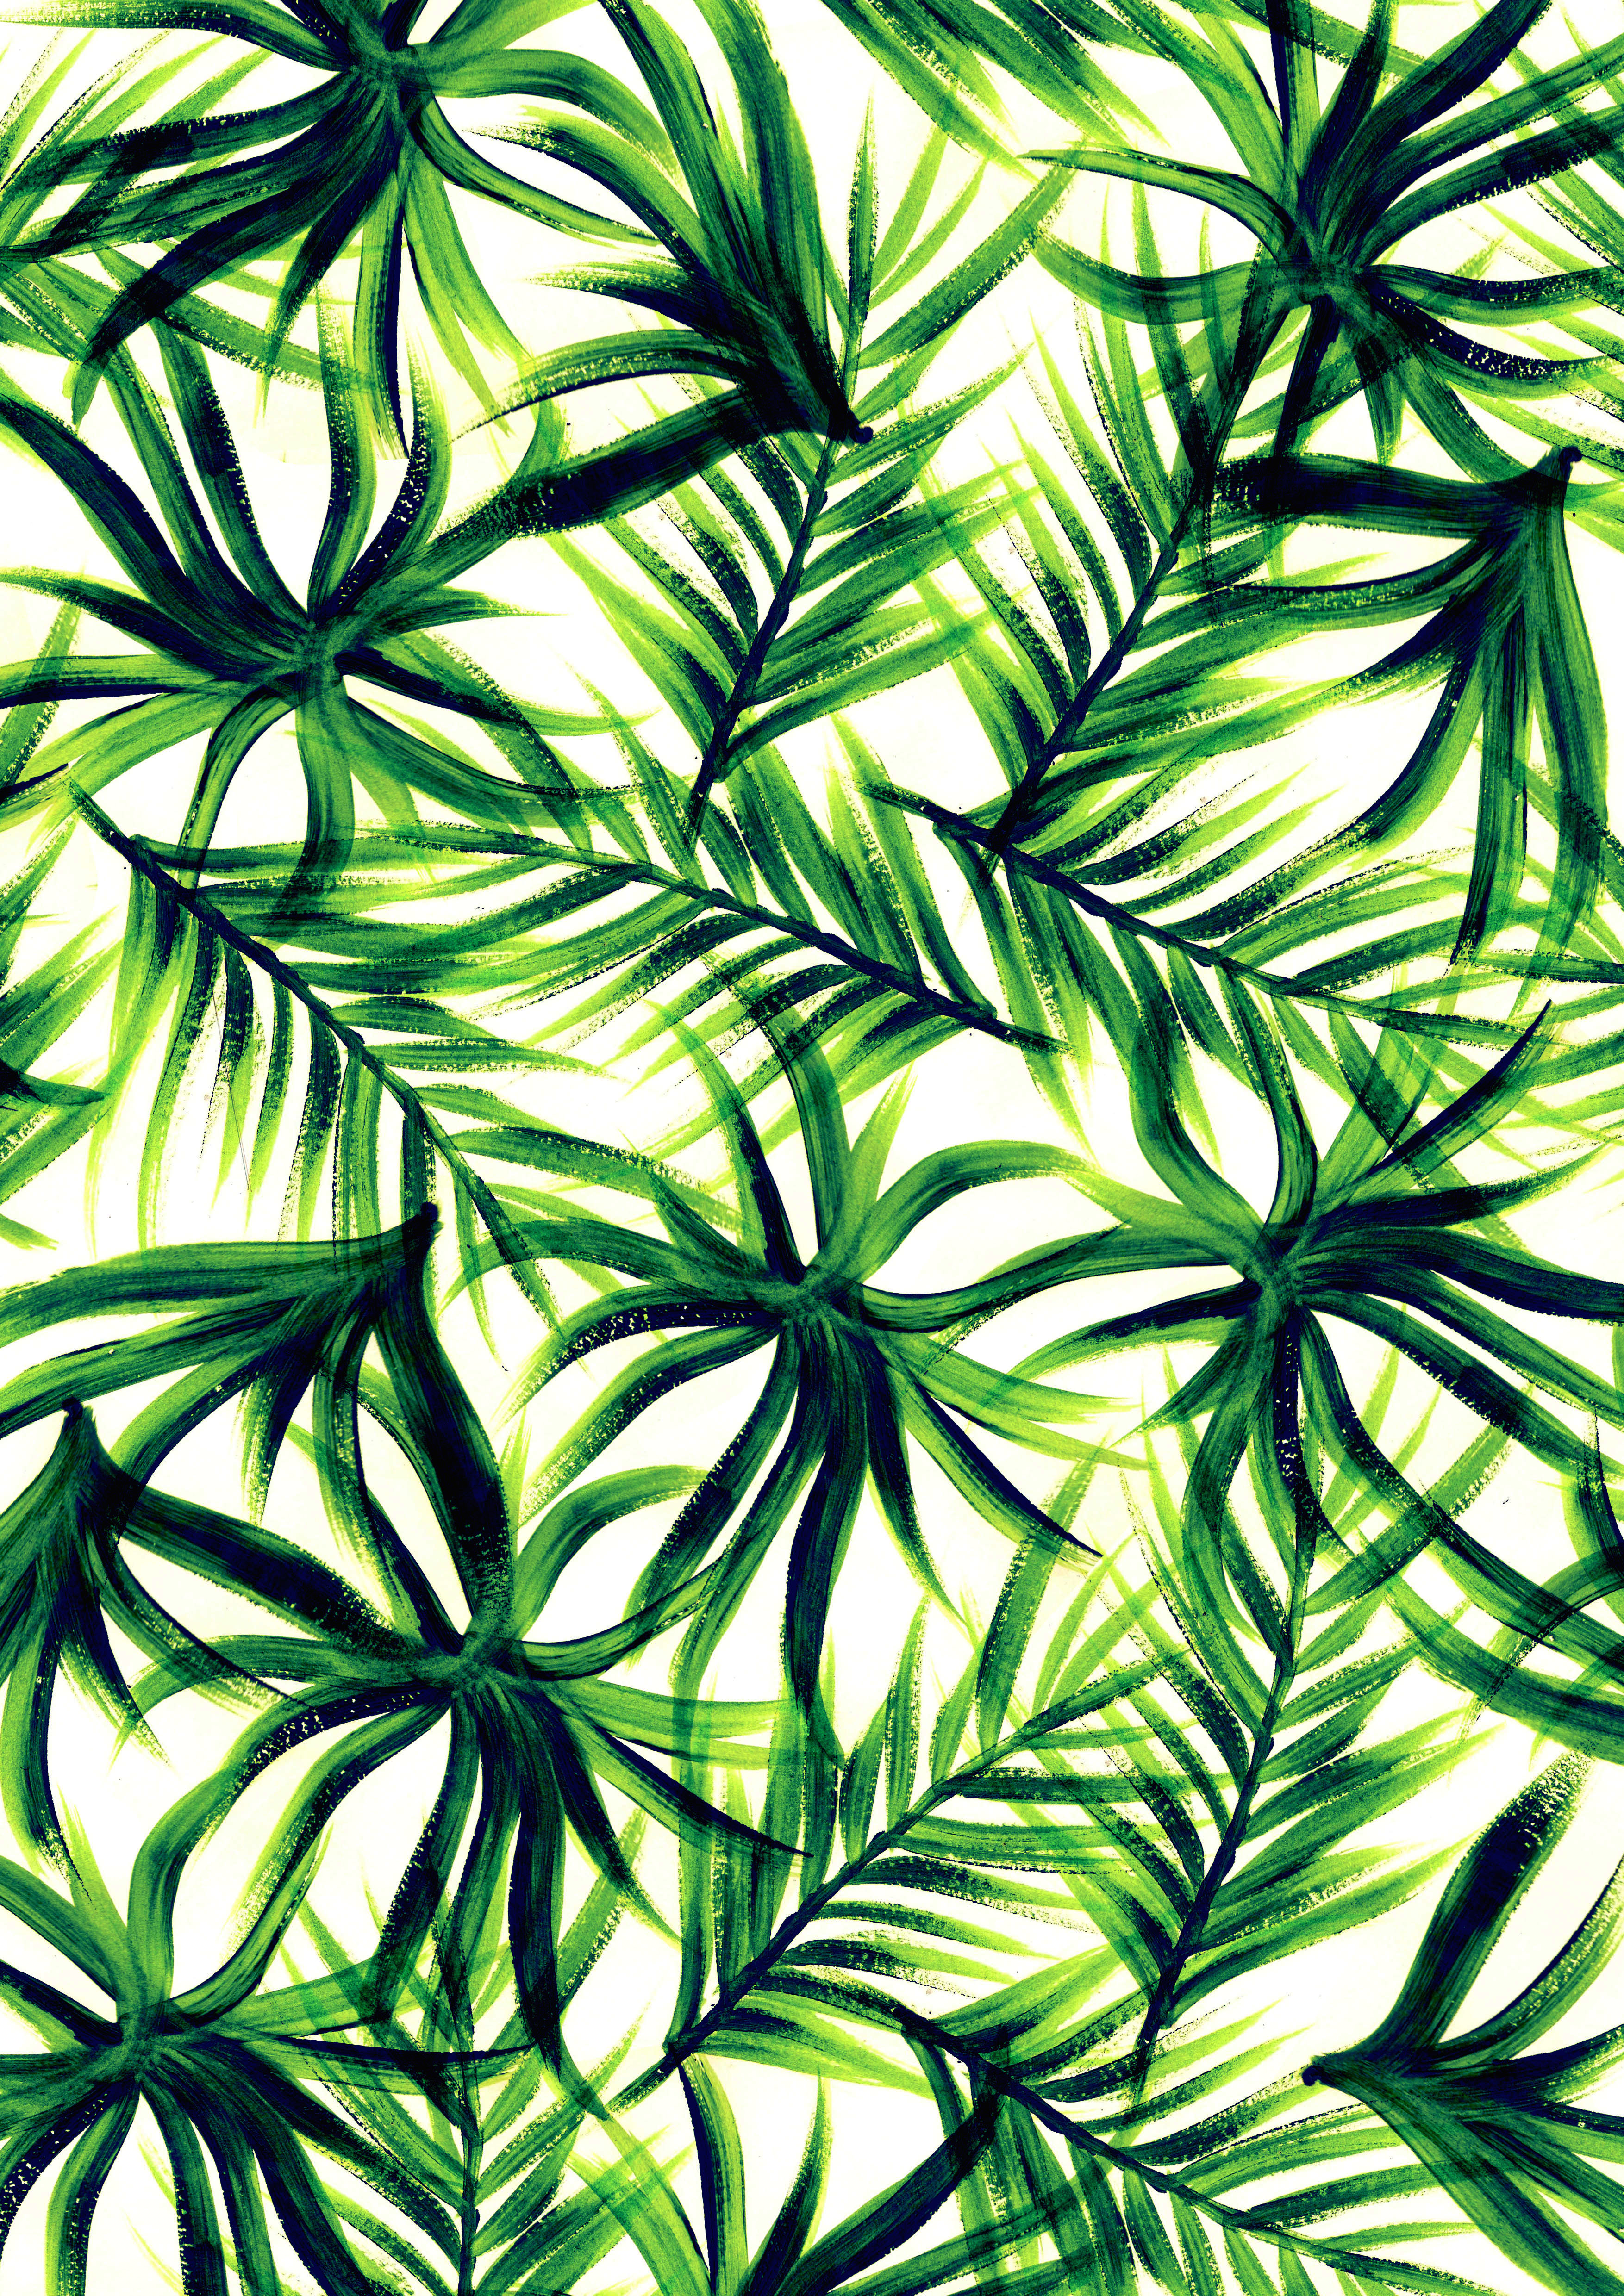 tapete mit palmendruck,blatt,grün,muster,pflanze,design